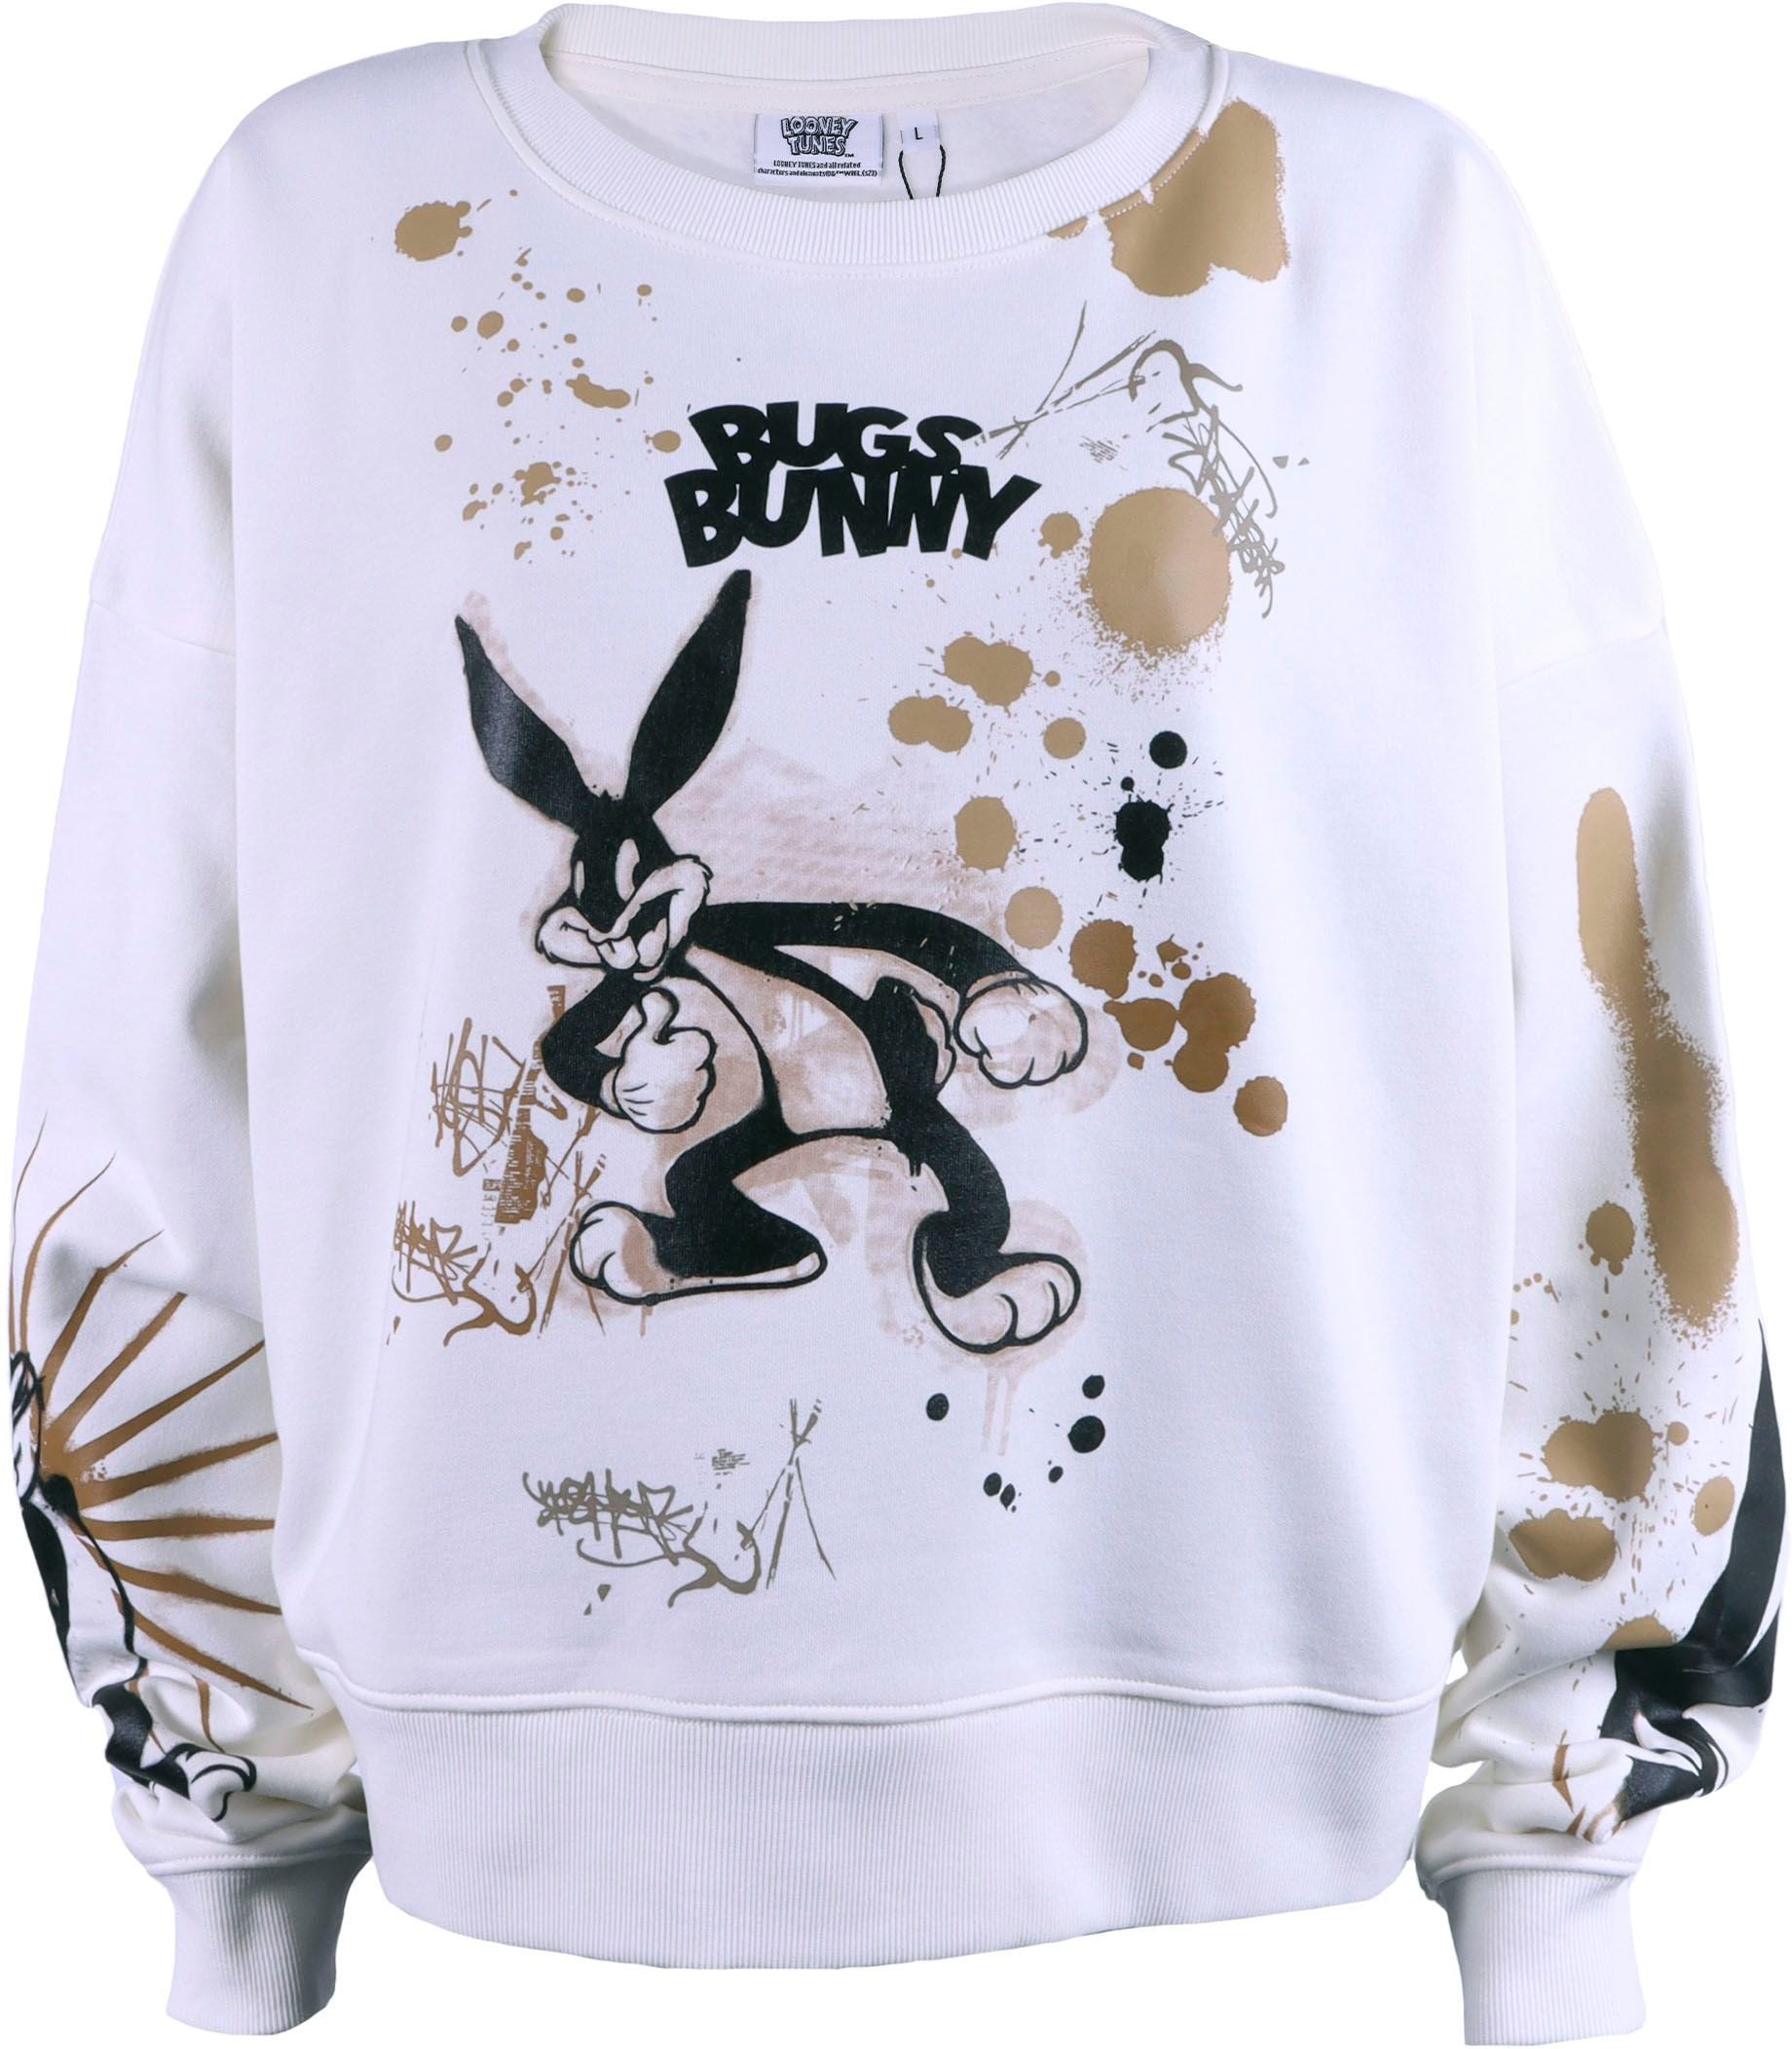 »Bugs York Capelli bestellen New York New Oversized Sweater Bunny«, Capelli Sweatshirt